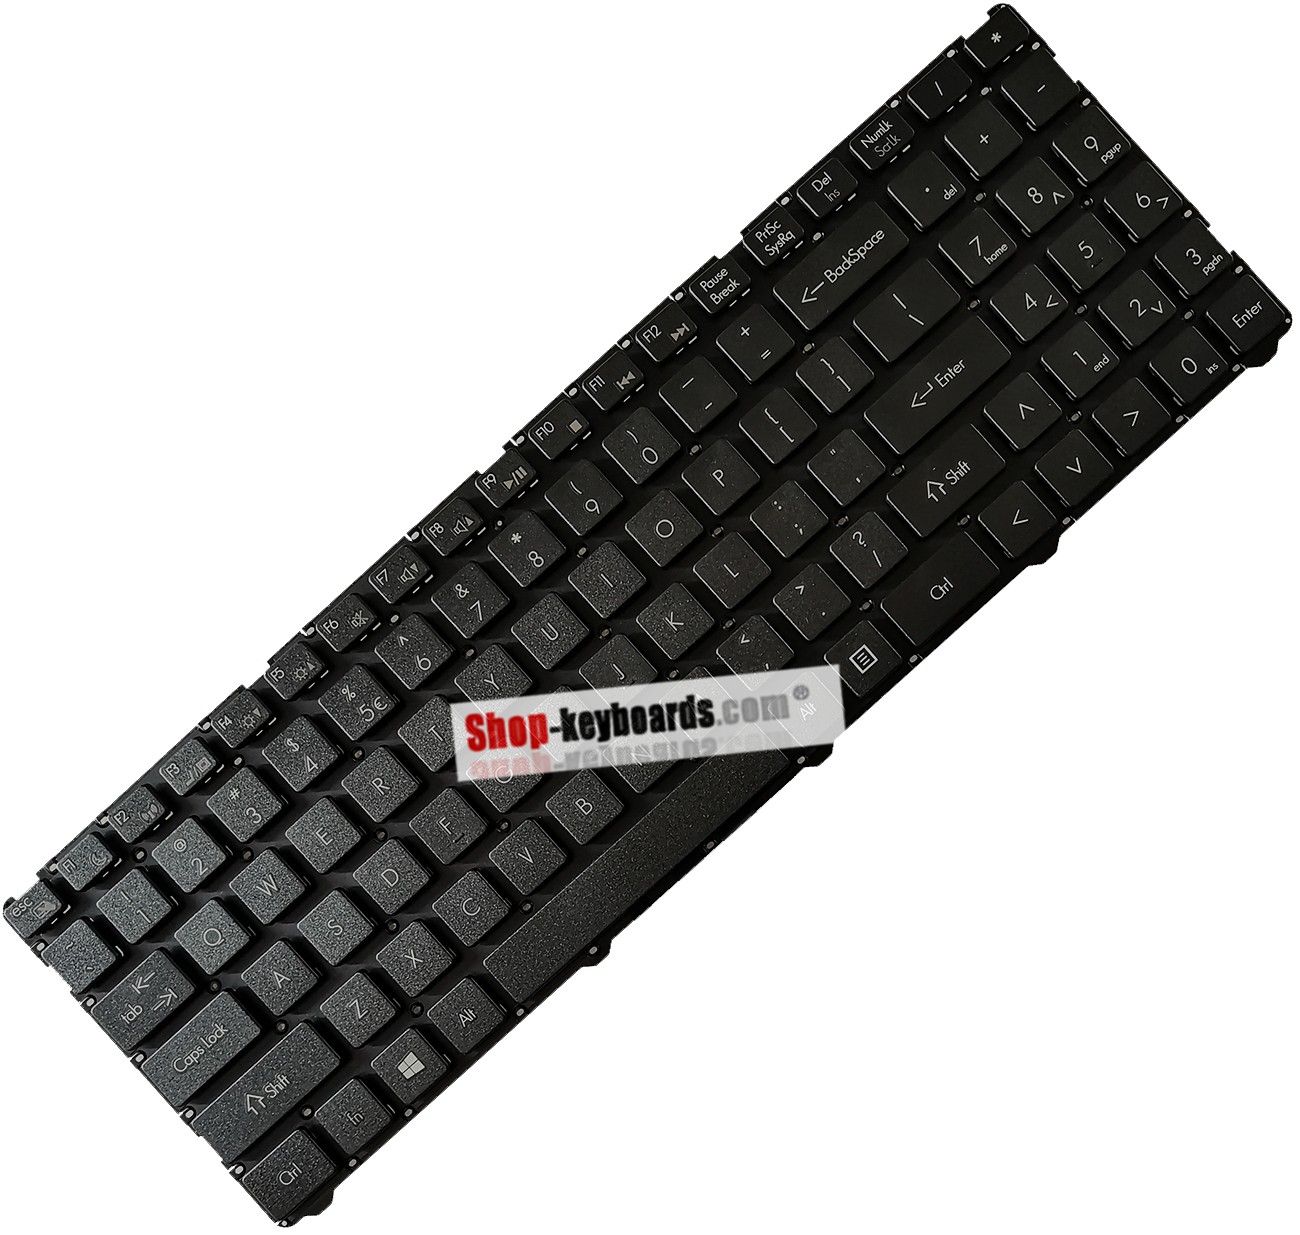 LG MP-12K73E0-9208 Keyboard replacement